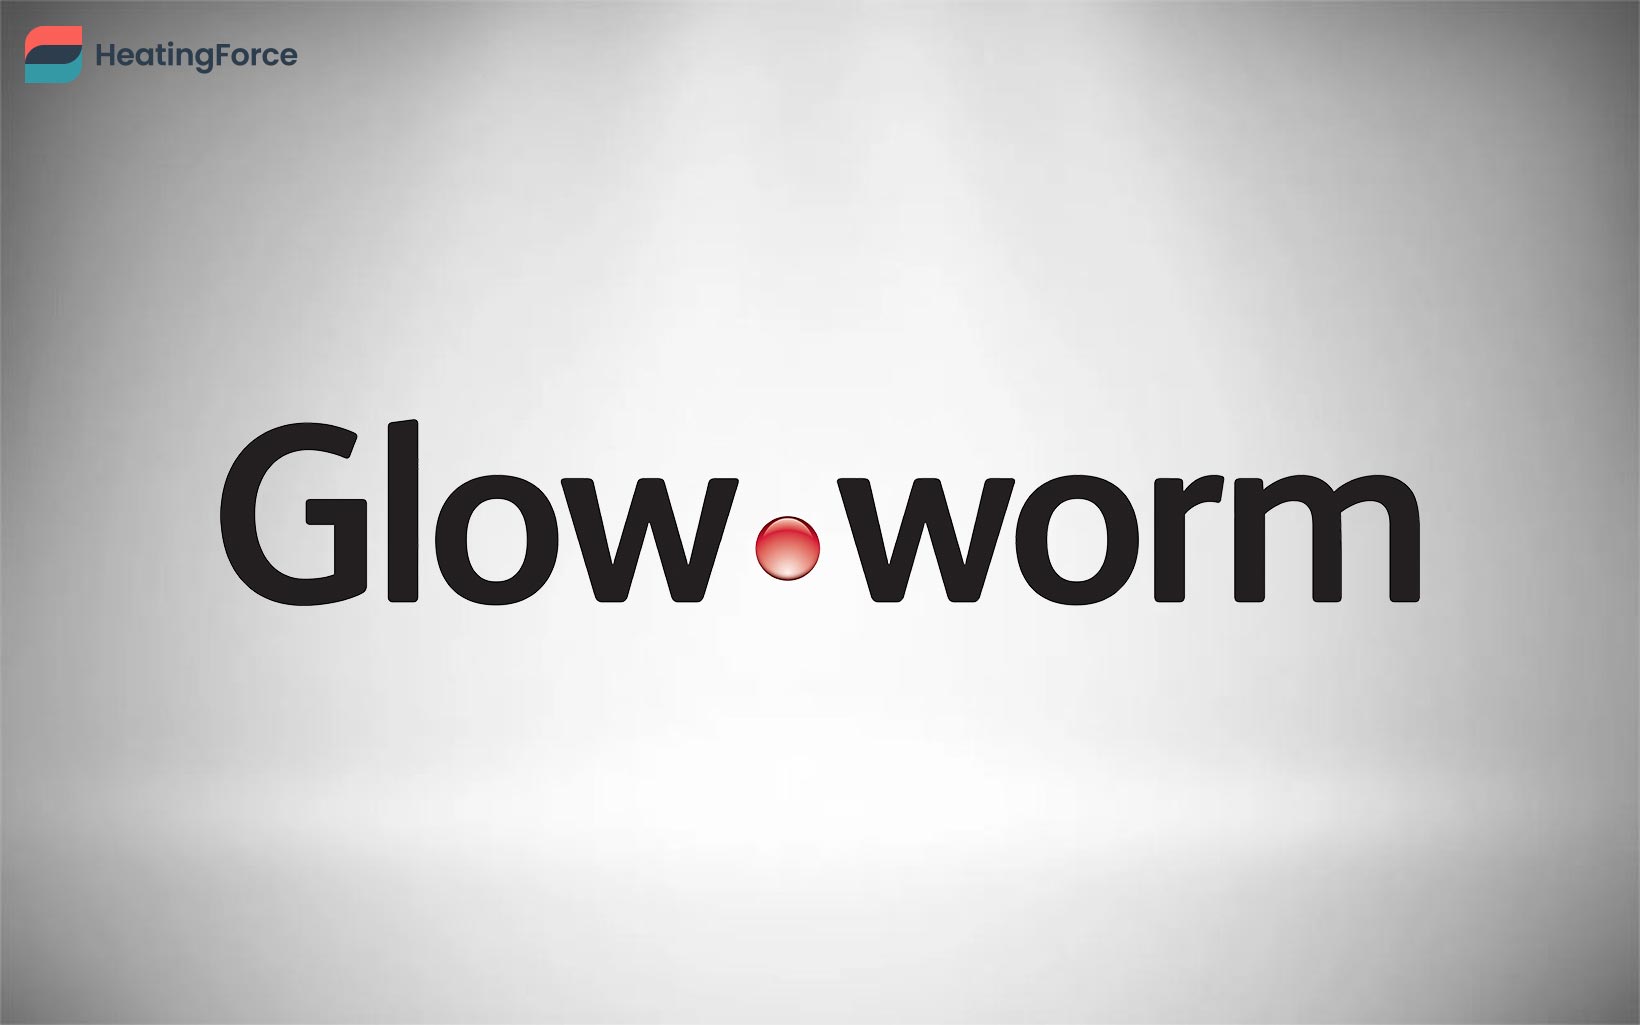 Glow Worm boilers